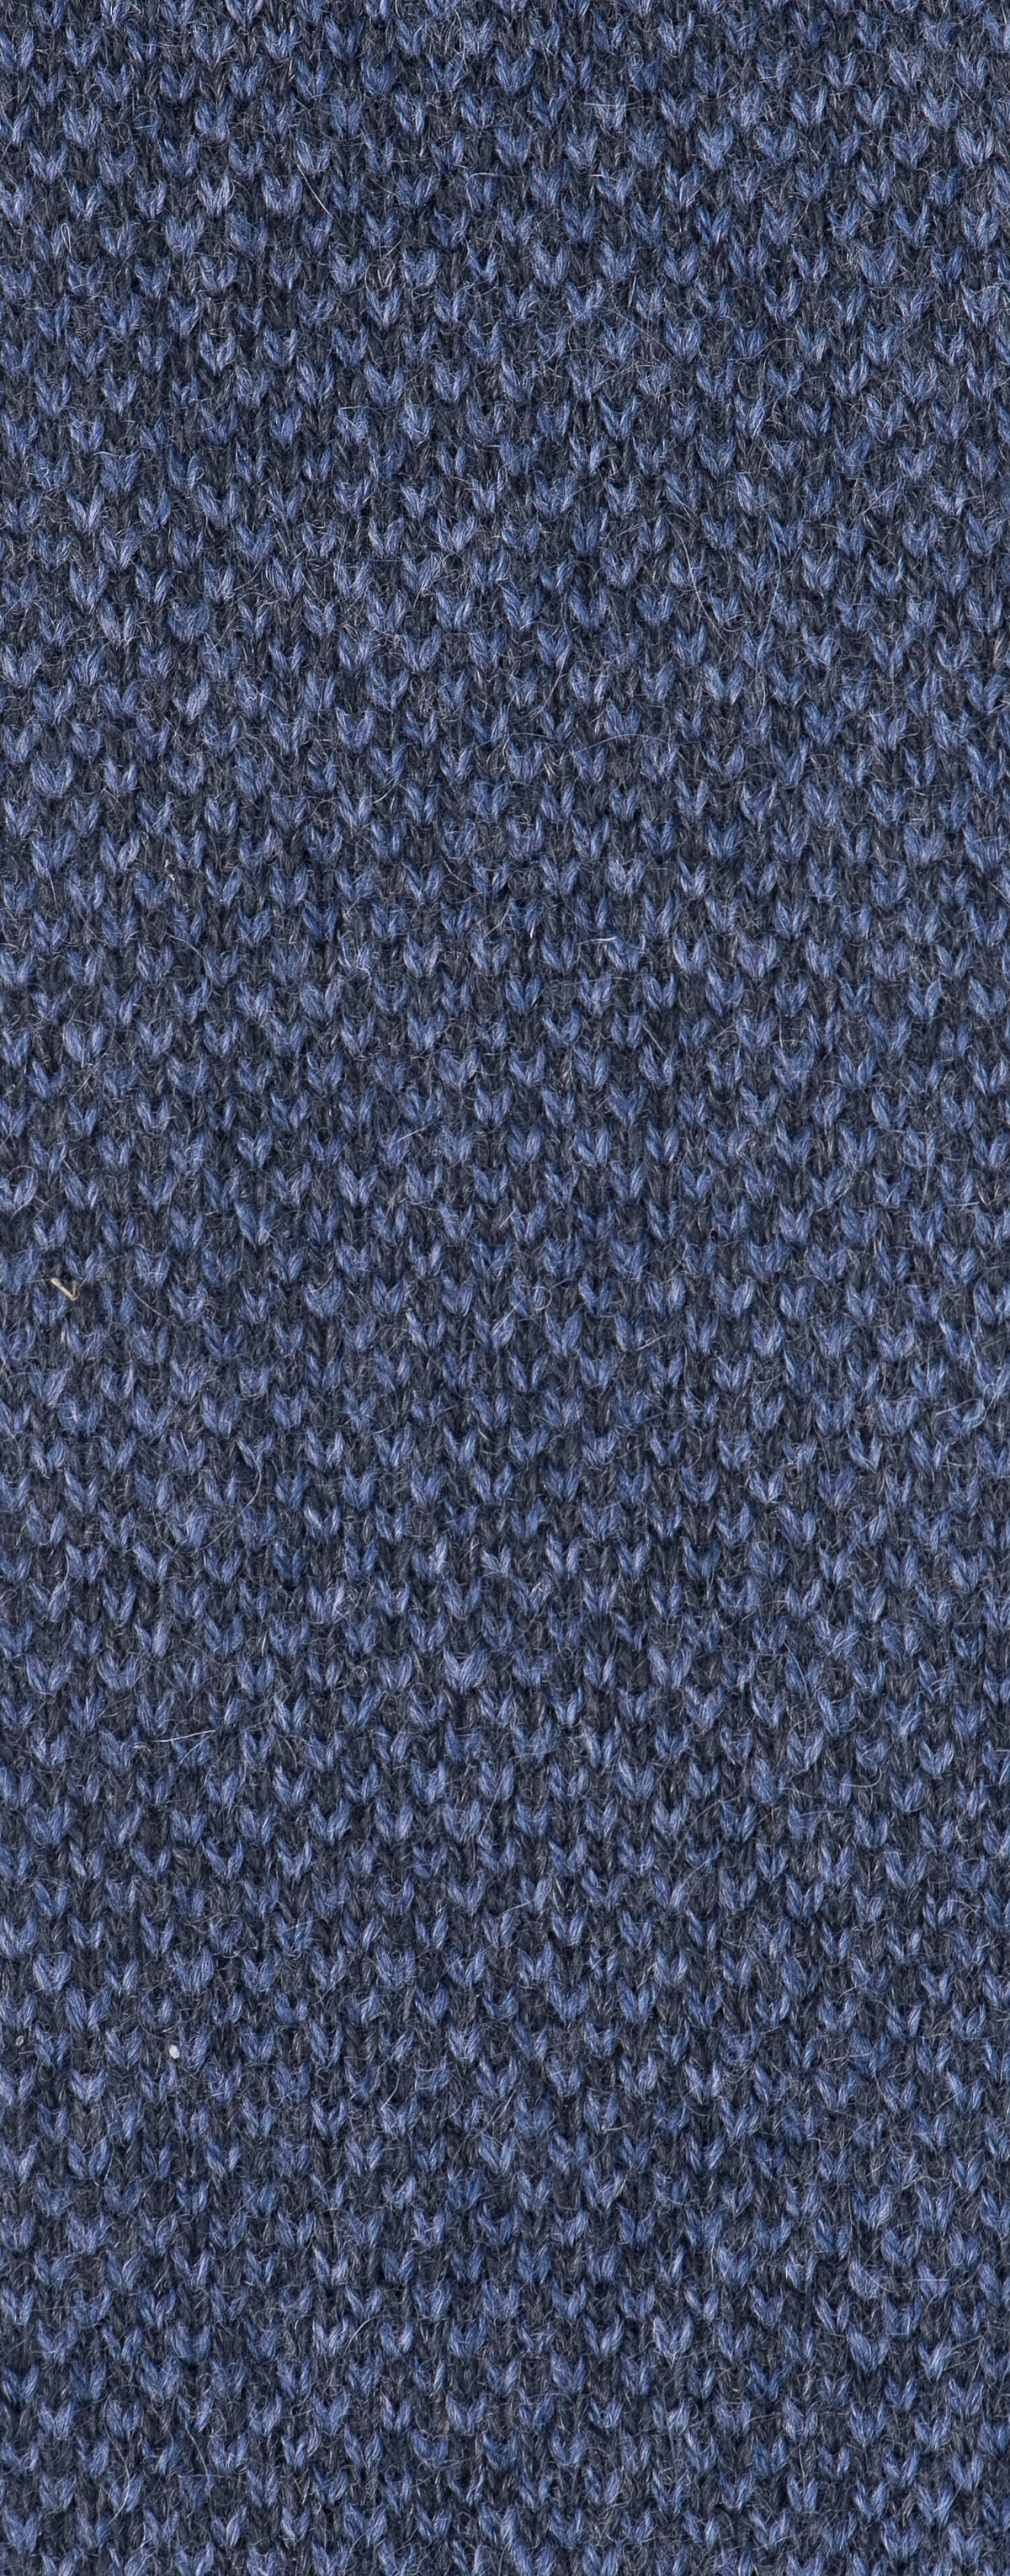 Slate Blue Cashmere Knit Tie